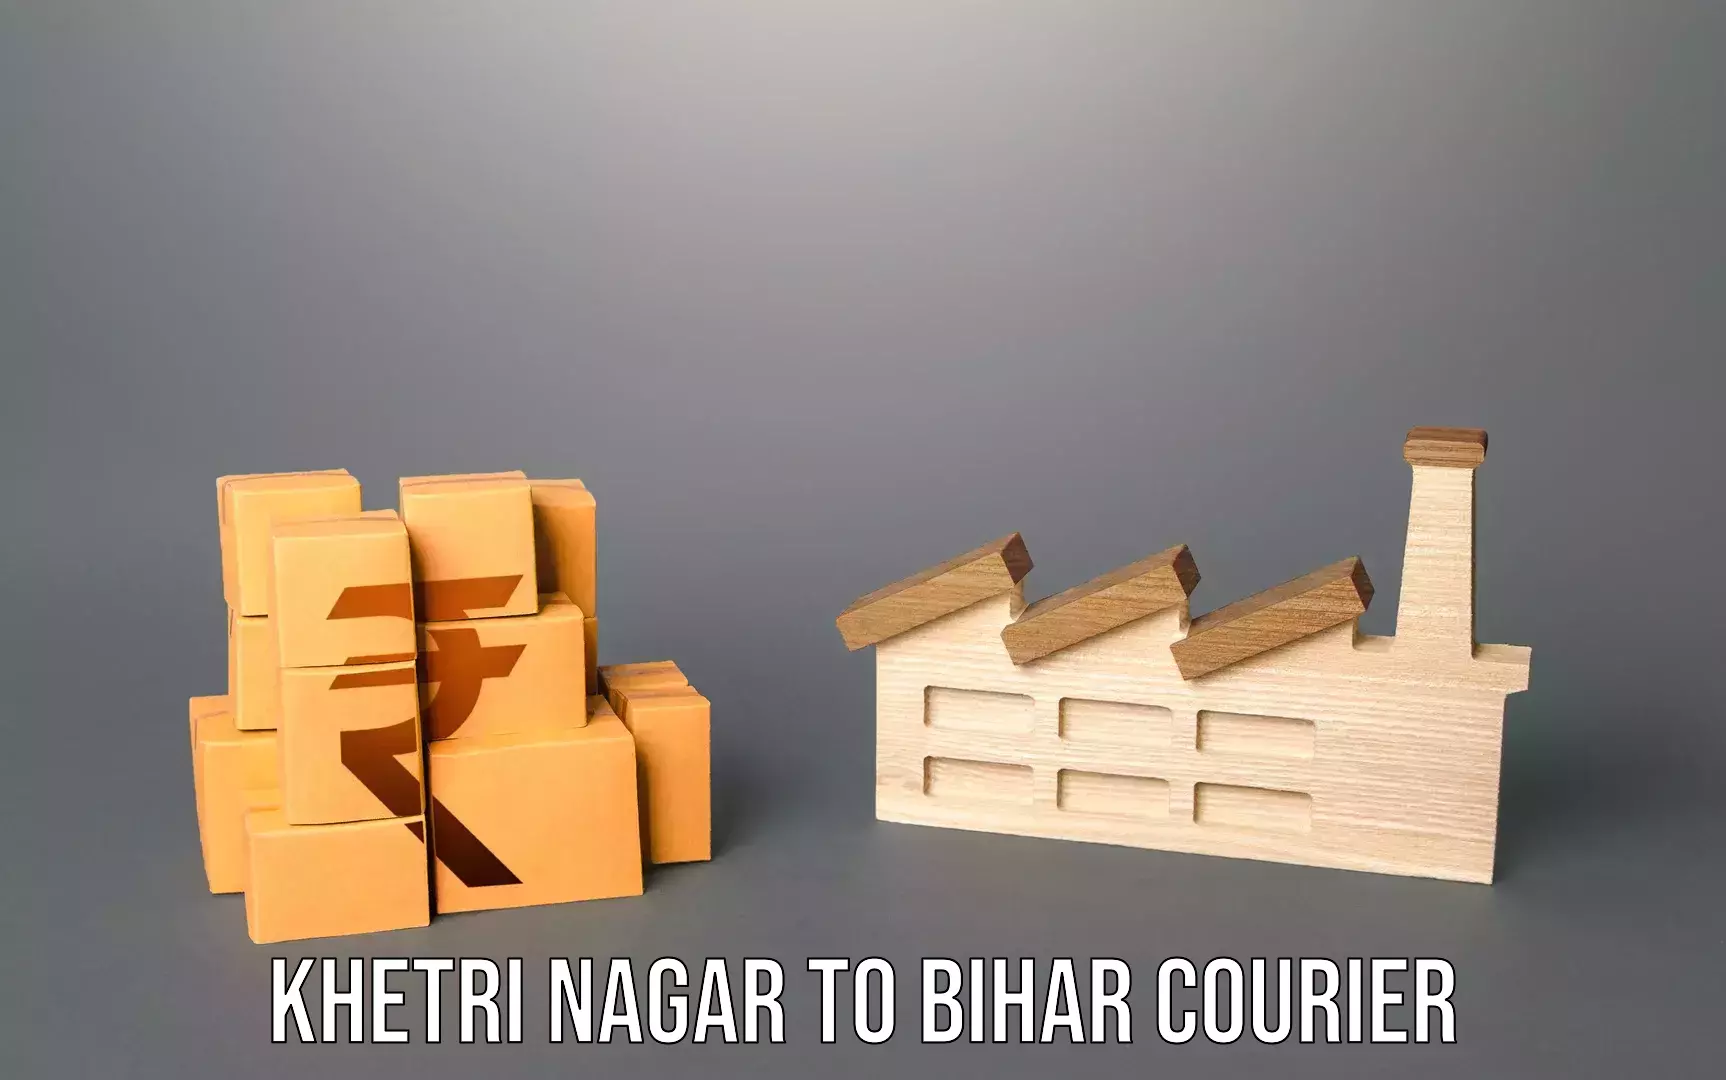 Baggage transport management Khetri Nagar to Bihar